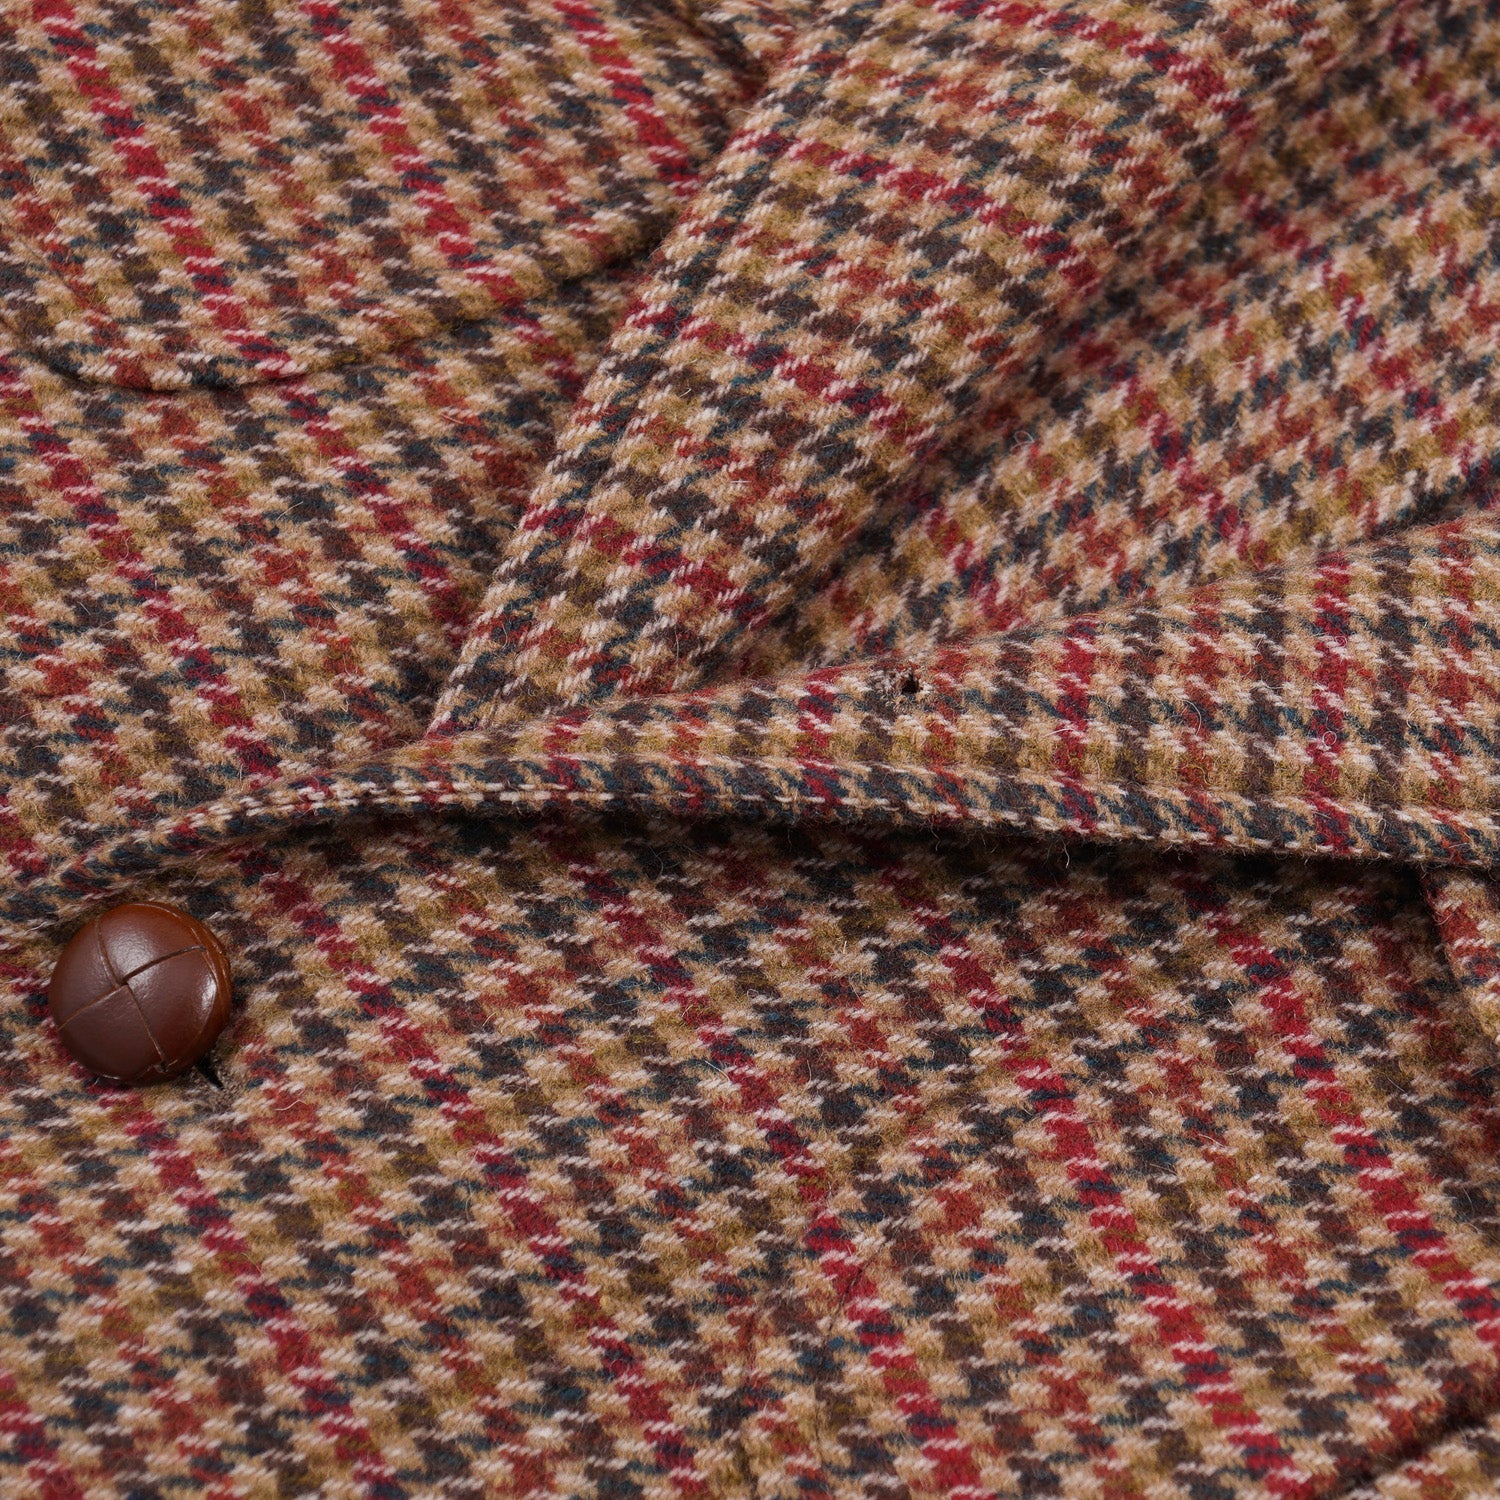 Luigi Borrelli Tweed Wool Field Blazer - Top Shelf Apparel